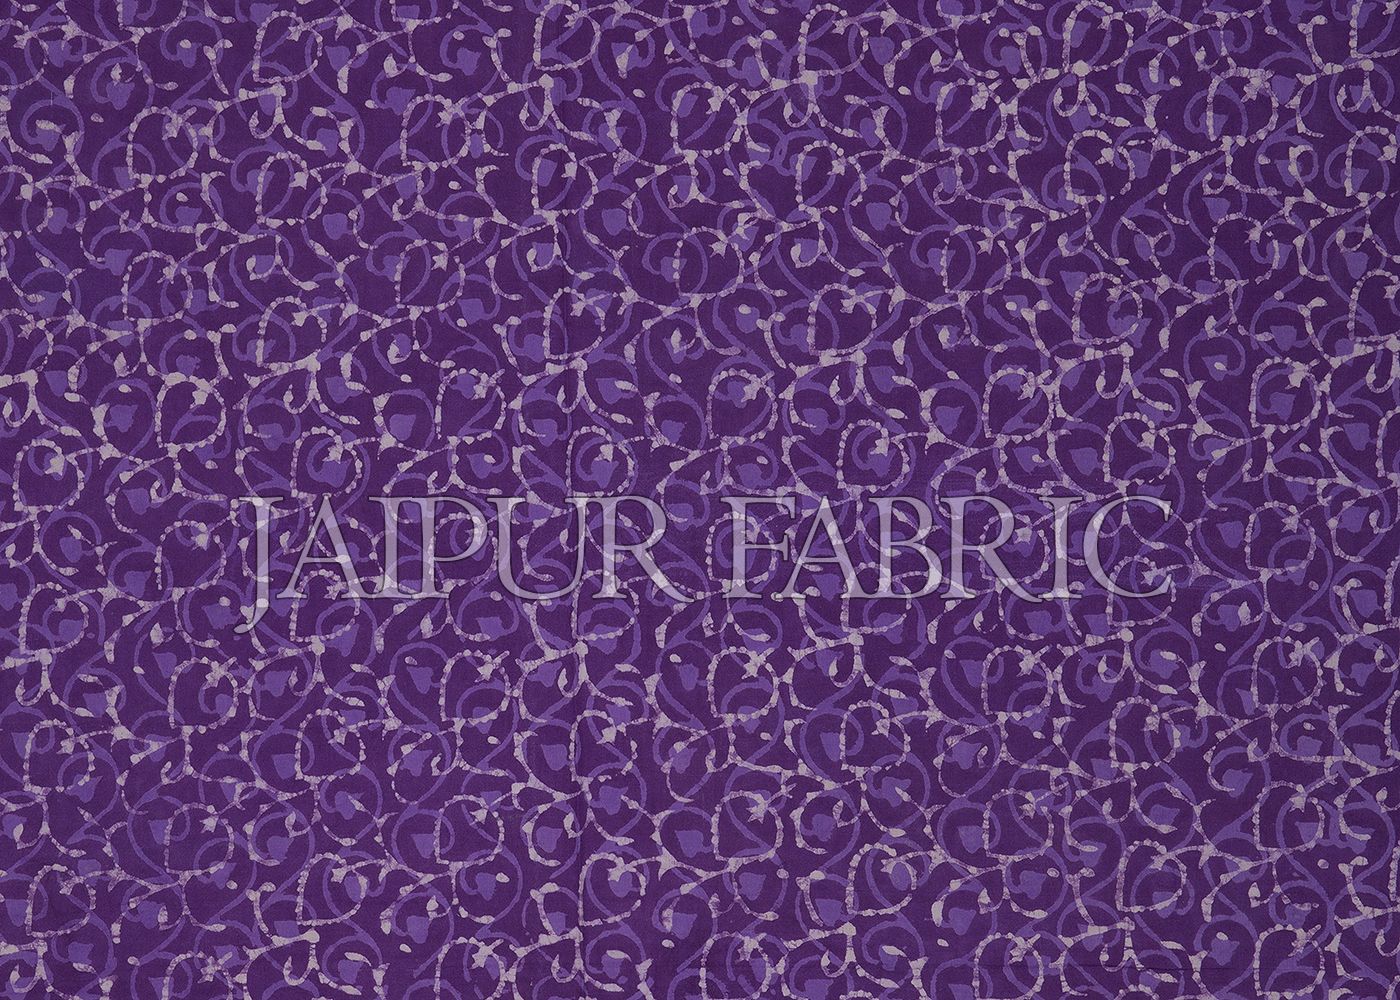 Purple Base Leaf Pattern Dhabu Print Cotton Double Bed Sheet